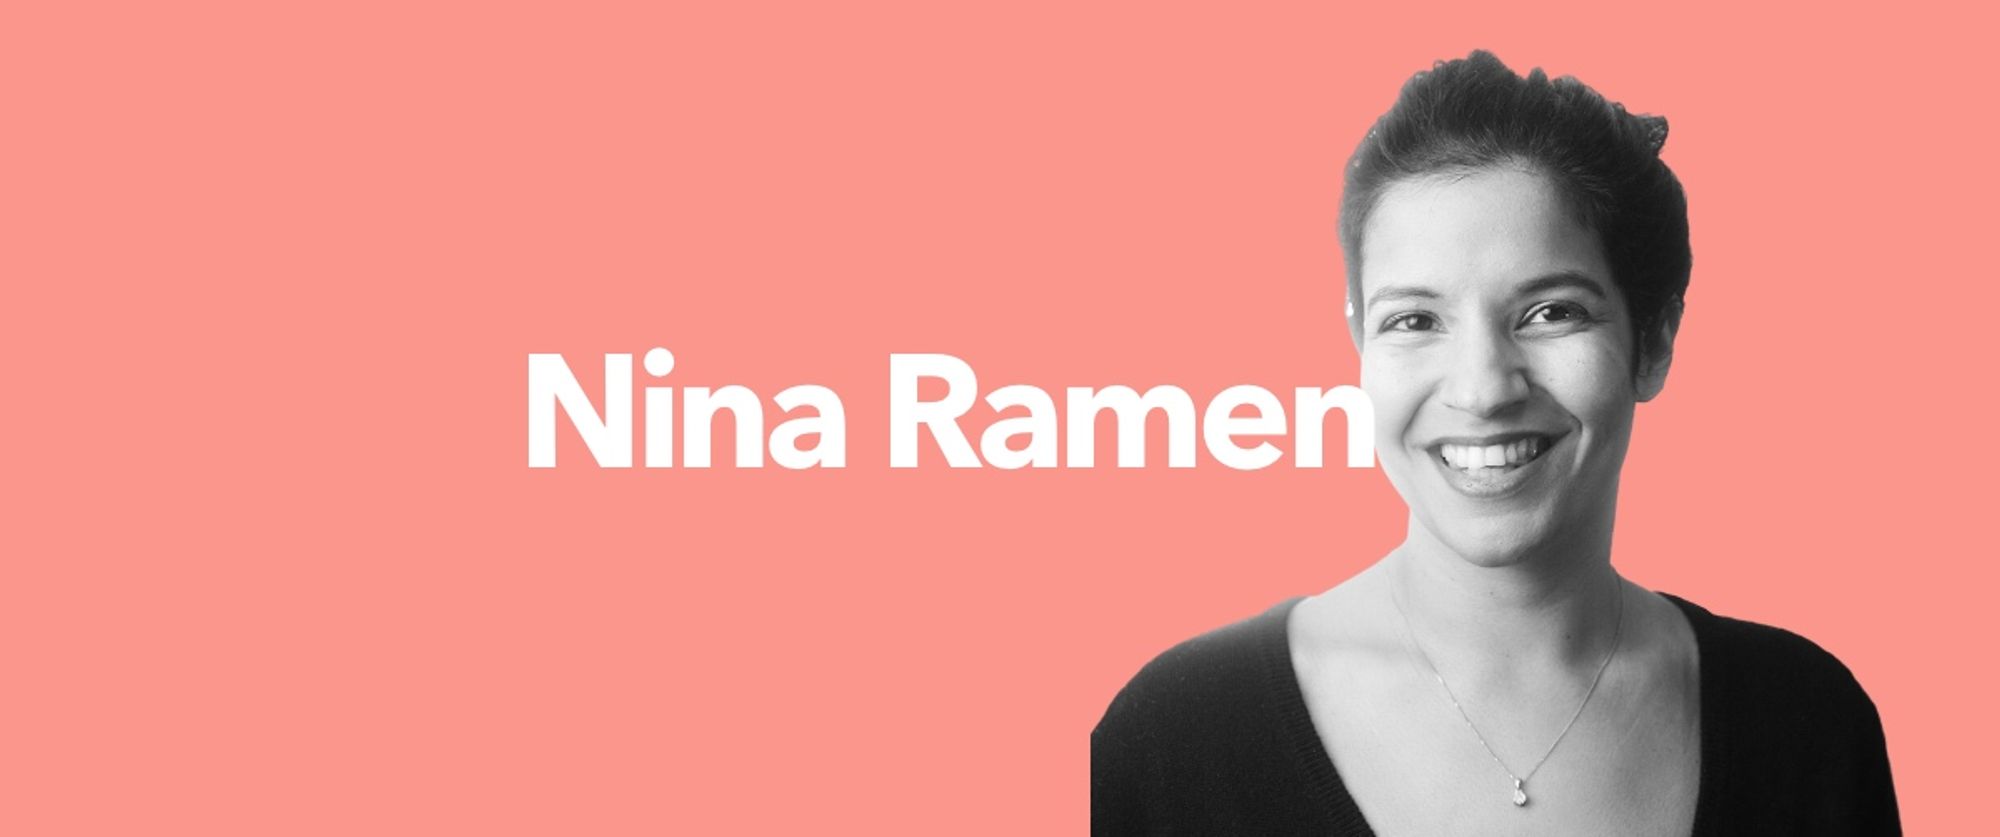 Nina Ramen